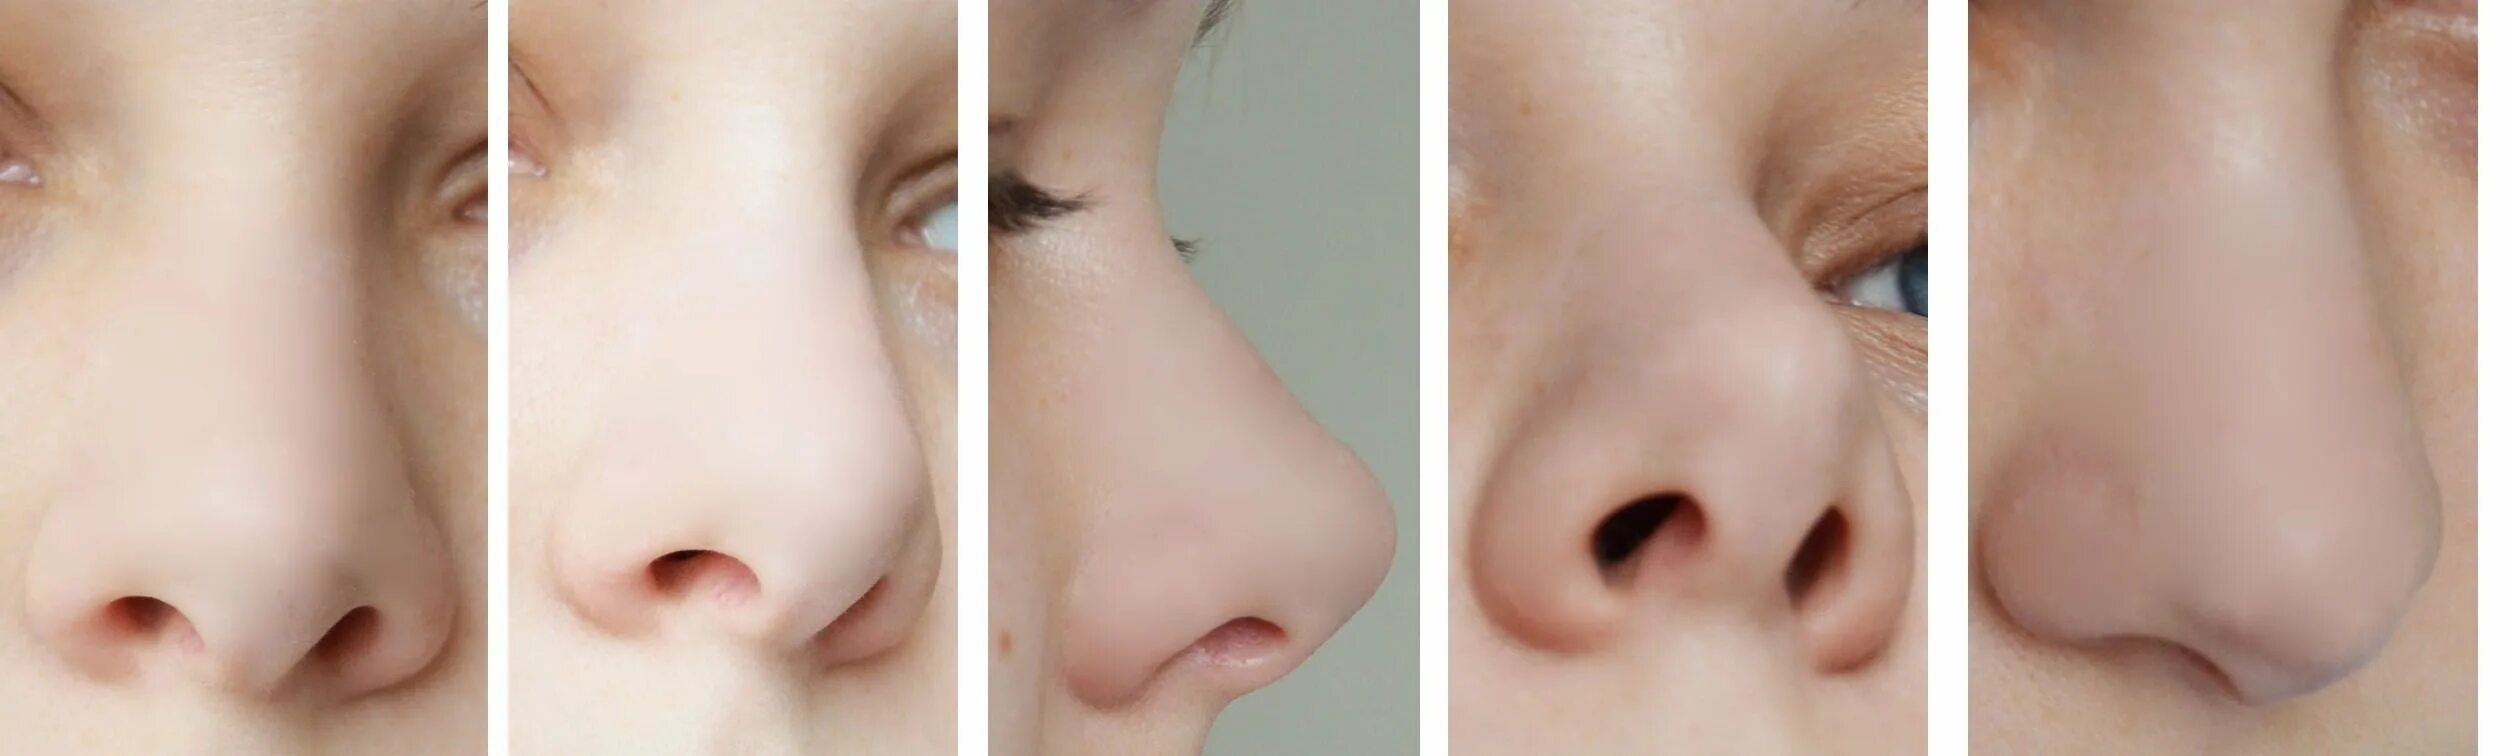 Нос снизу. Человеческий нос. Нос в разных ракурсах. Нос референс. Нос ракурсы.